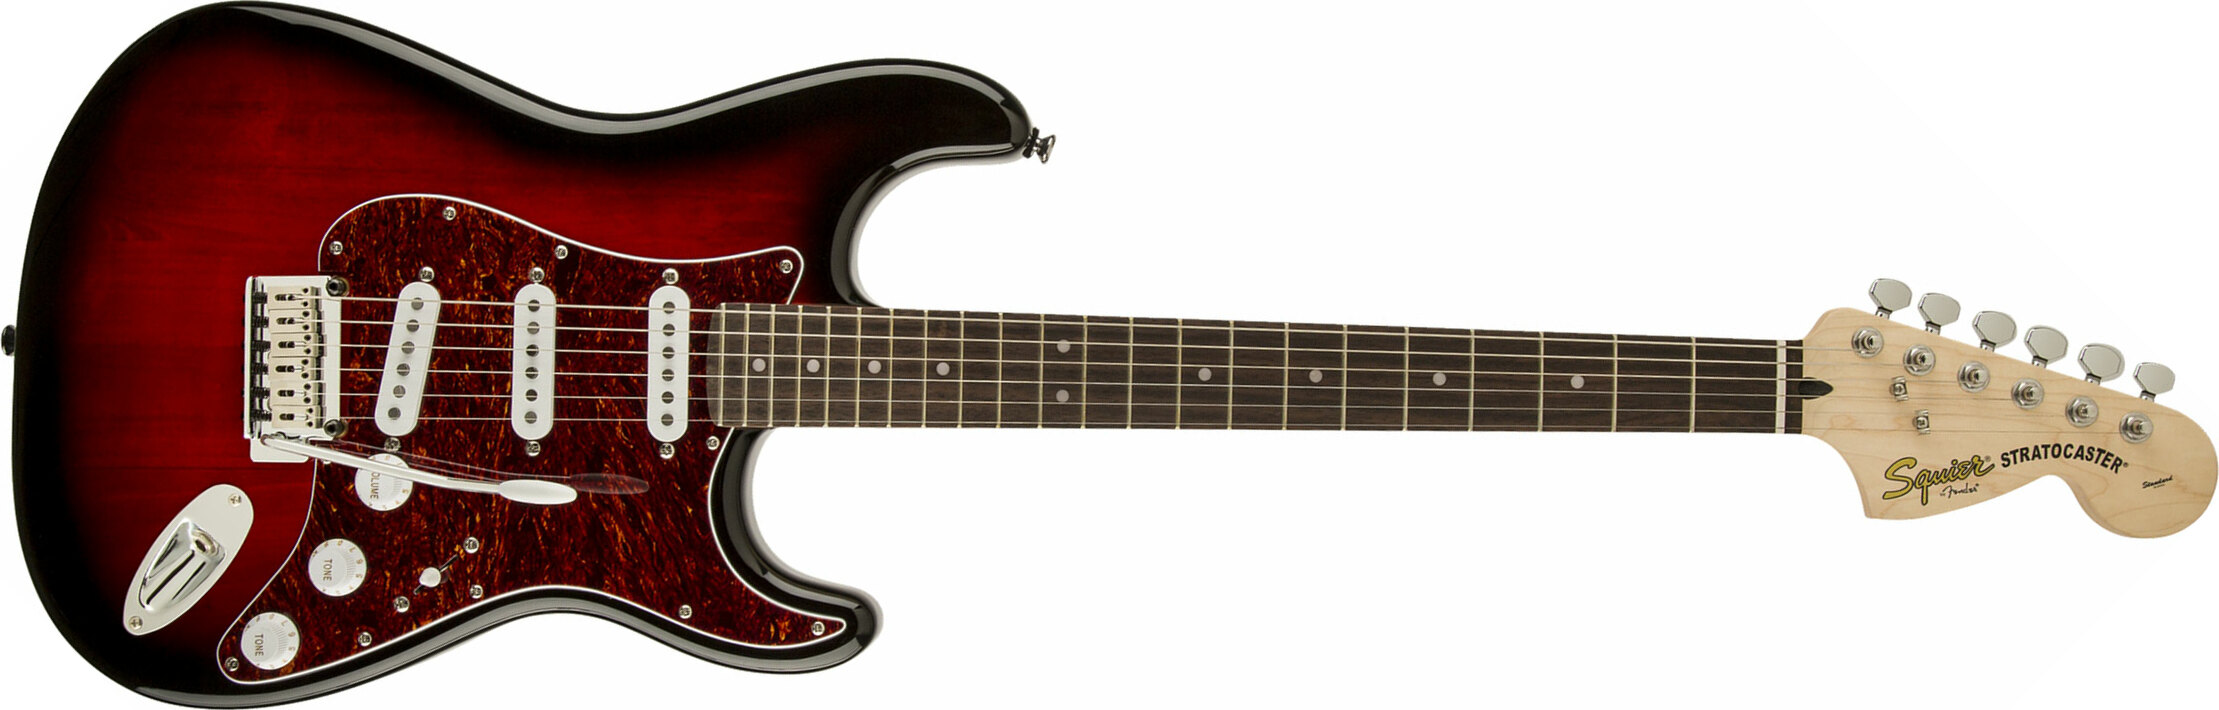 Squier Strat Standard Rw - Antique Burst - Guitarra eléctrica con forma de str. - Main picture